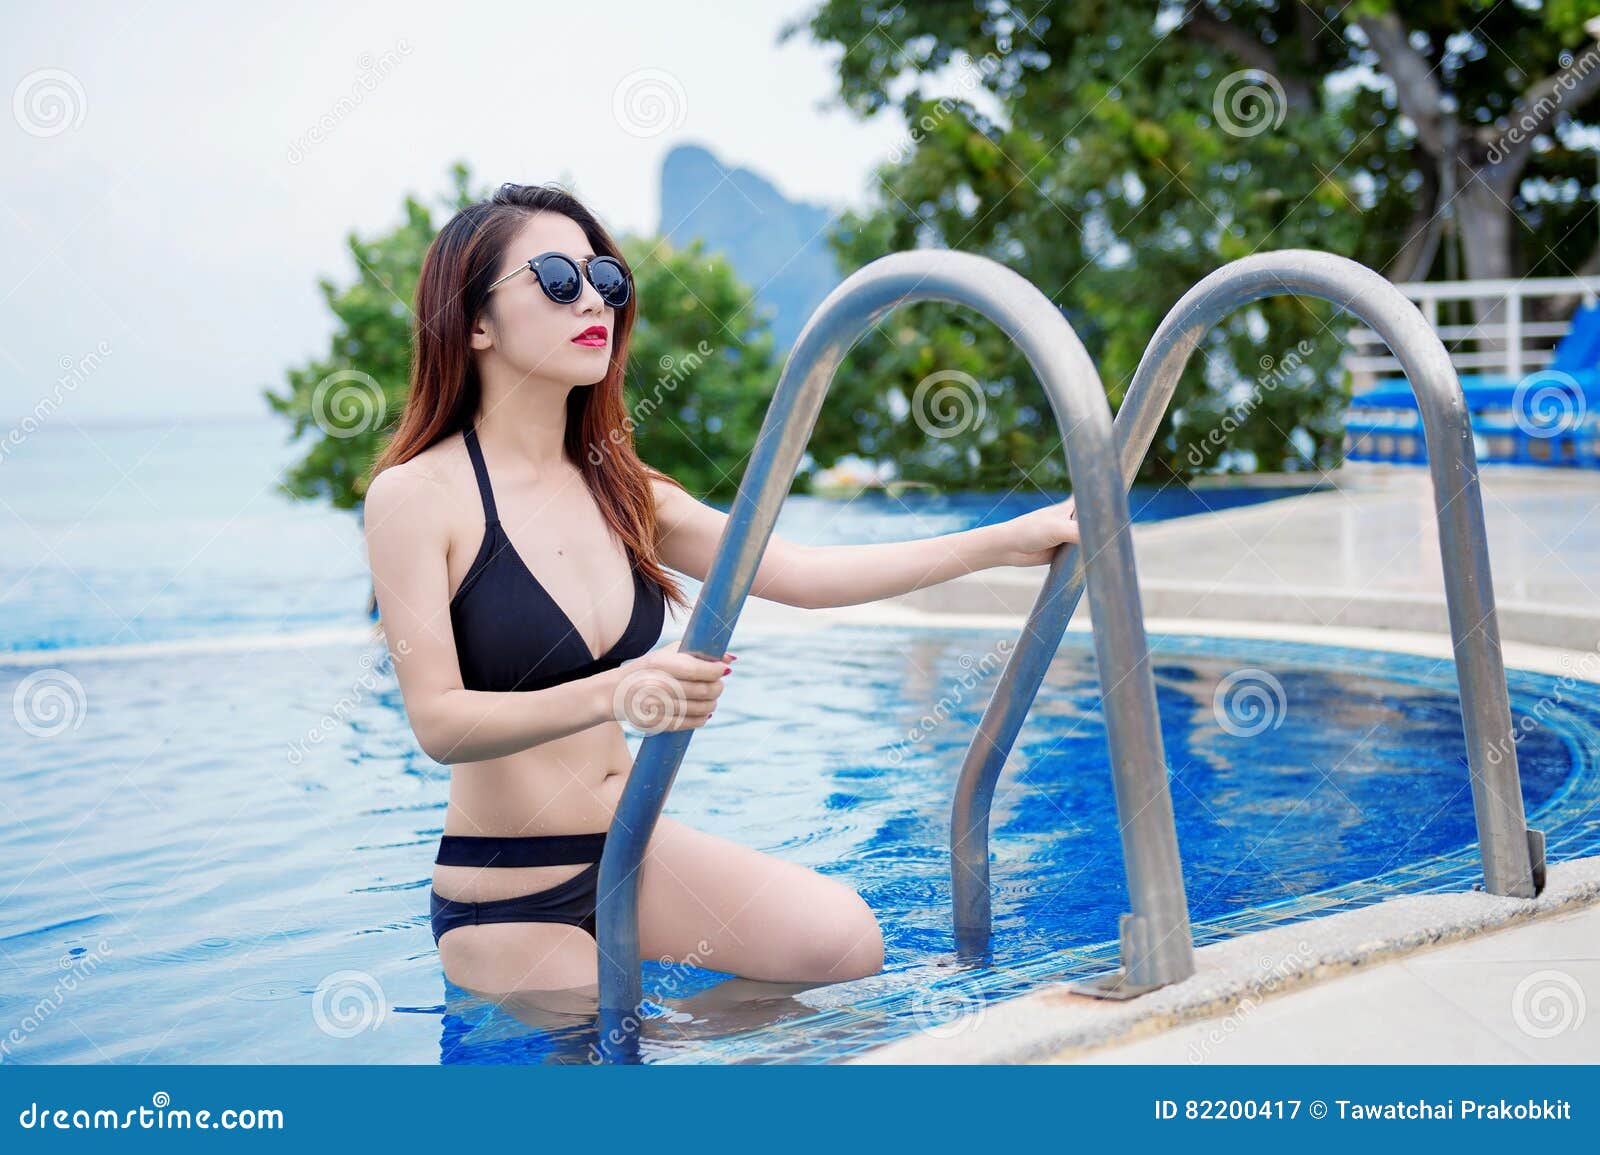 girl in bikini by indoor pool xxx pics